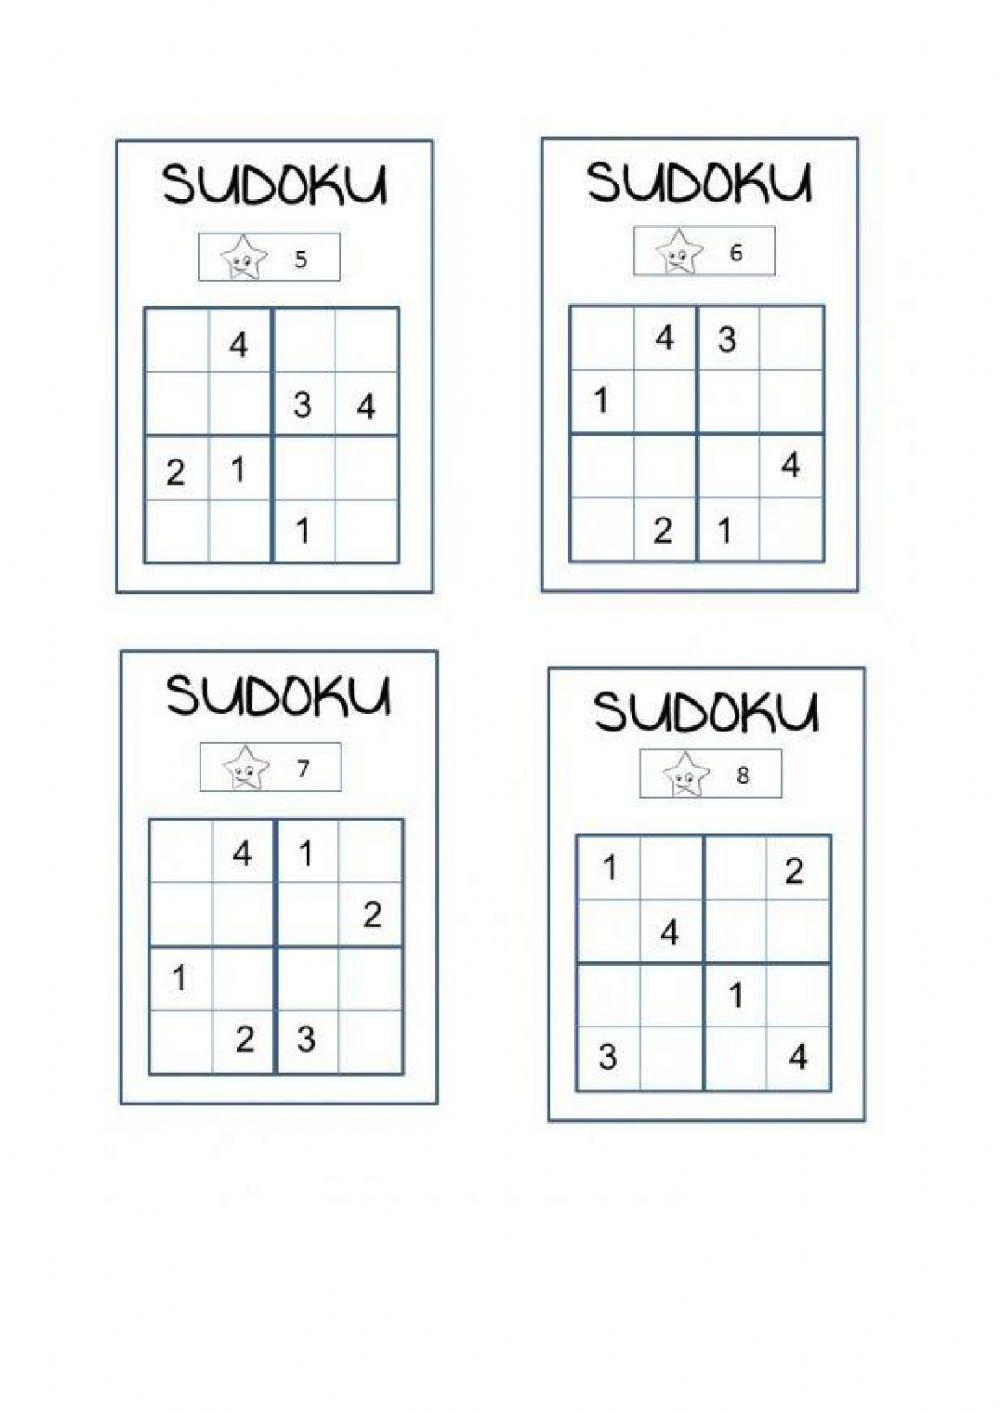 Sudoku 4x4